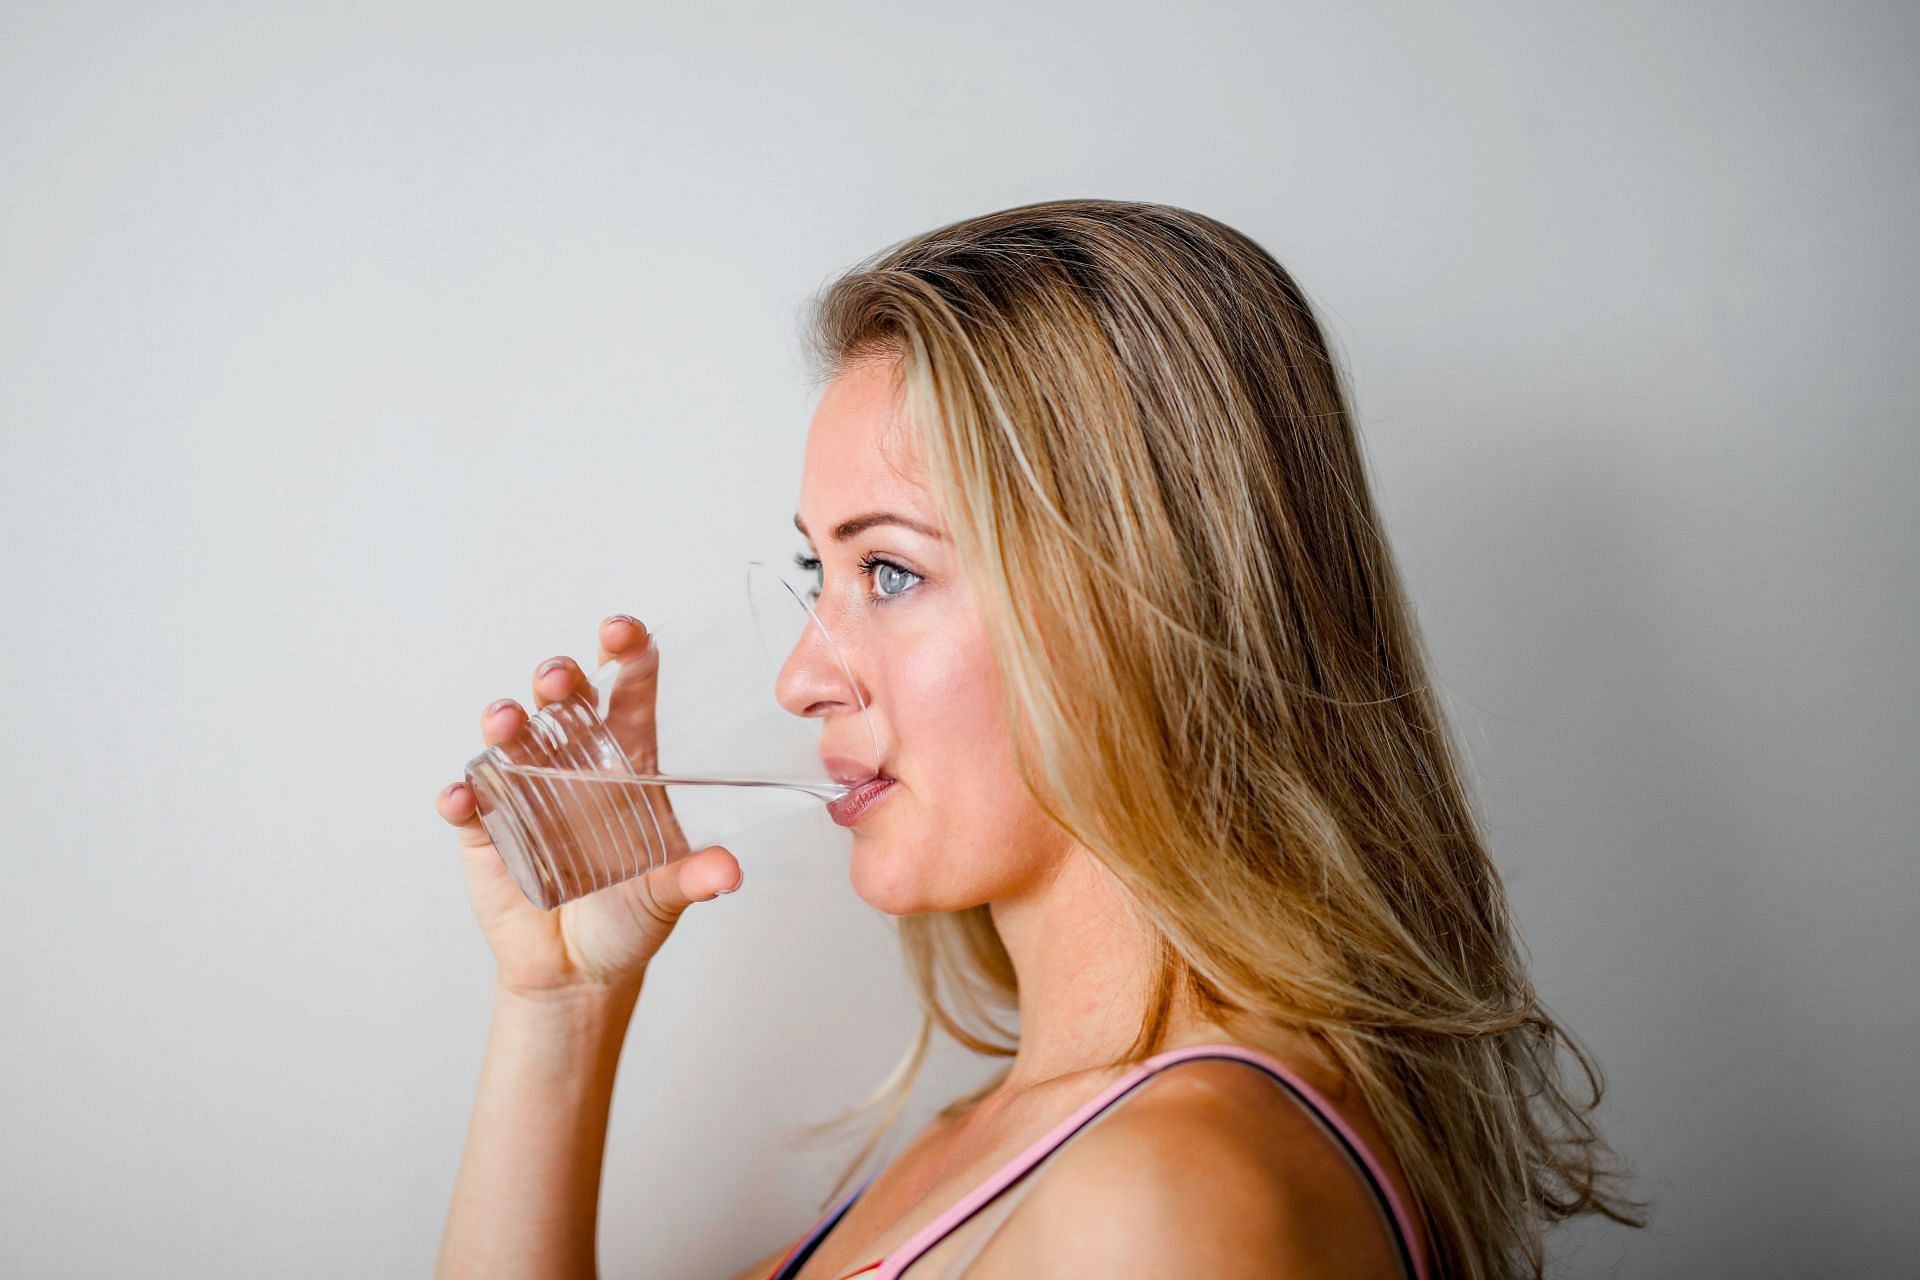 Drink enough water. (Image credits: Pexels/ Andrea Piacquadio)